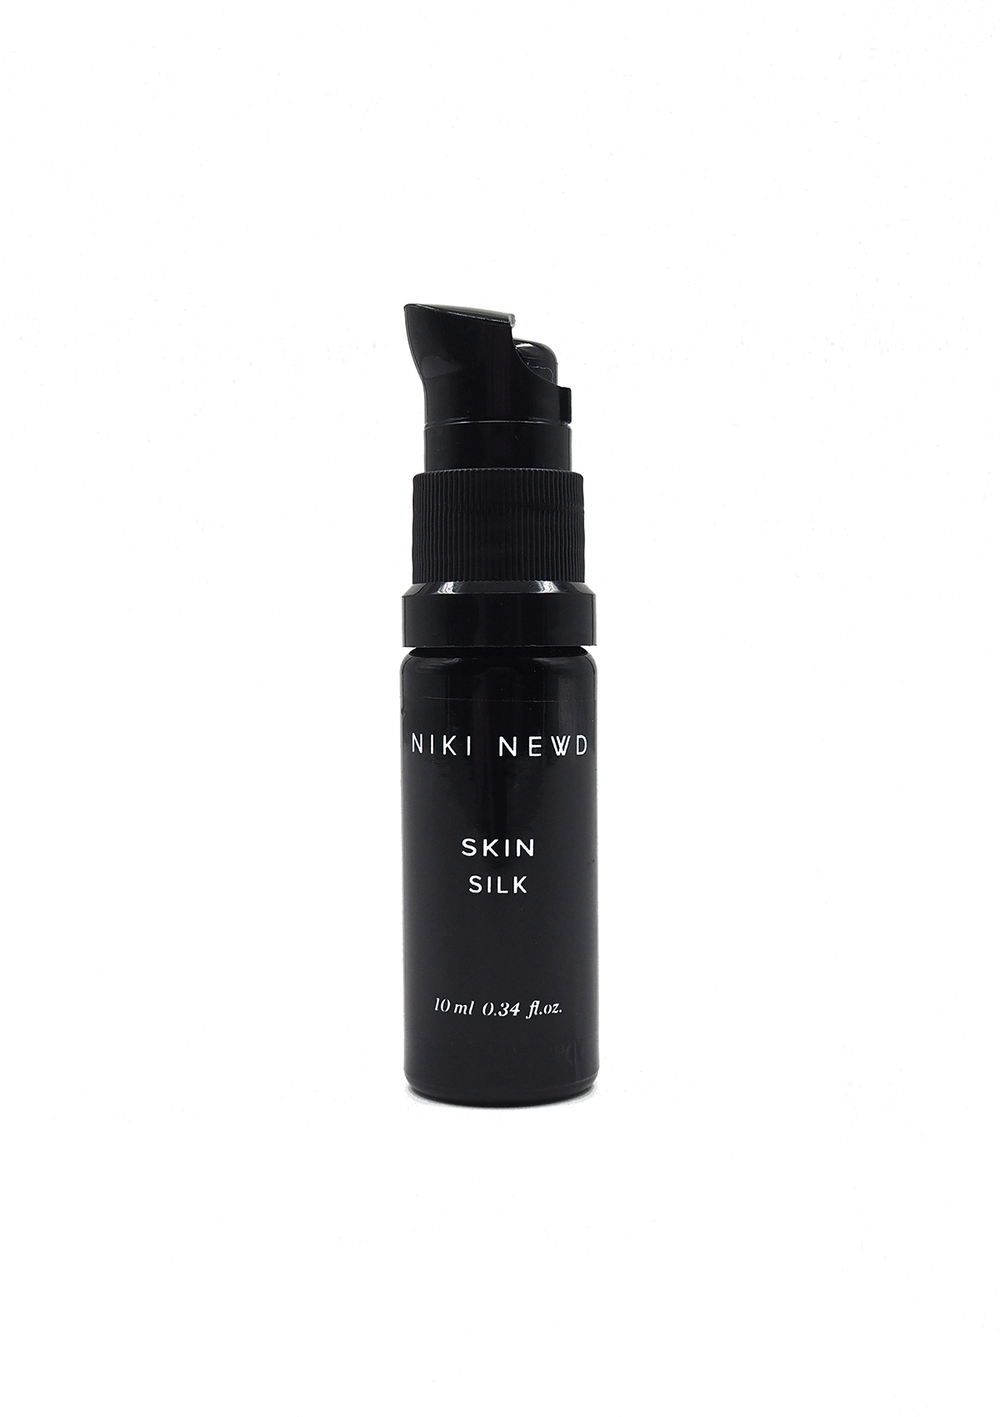 Niki Newd Ultra fresh natural skin care products from Scandinavia.